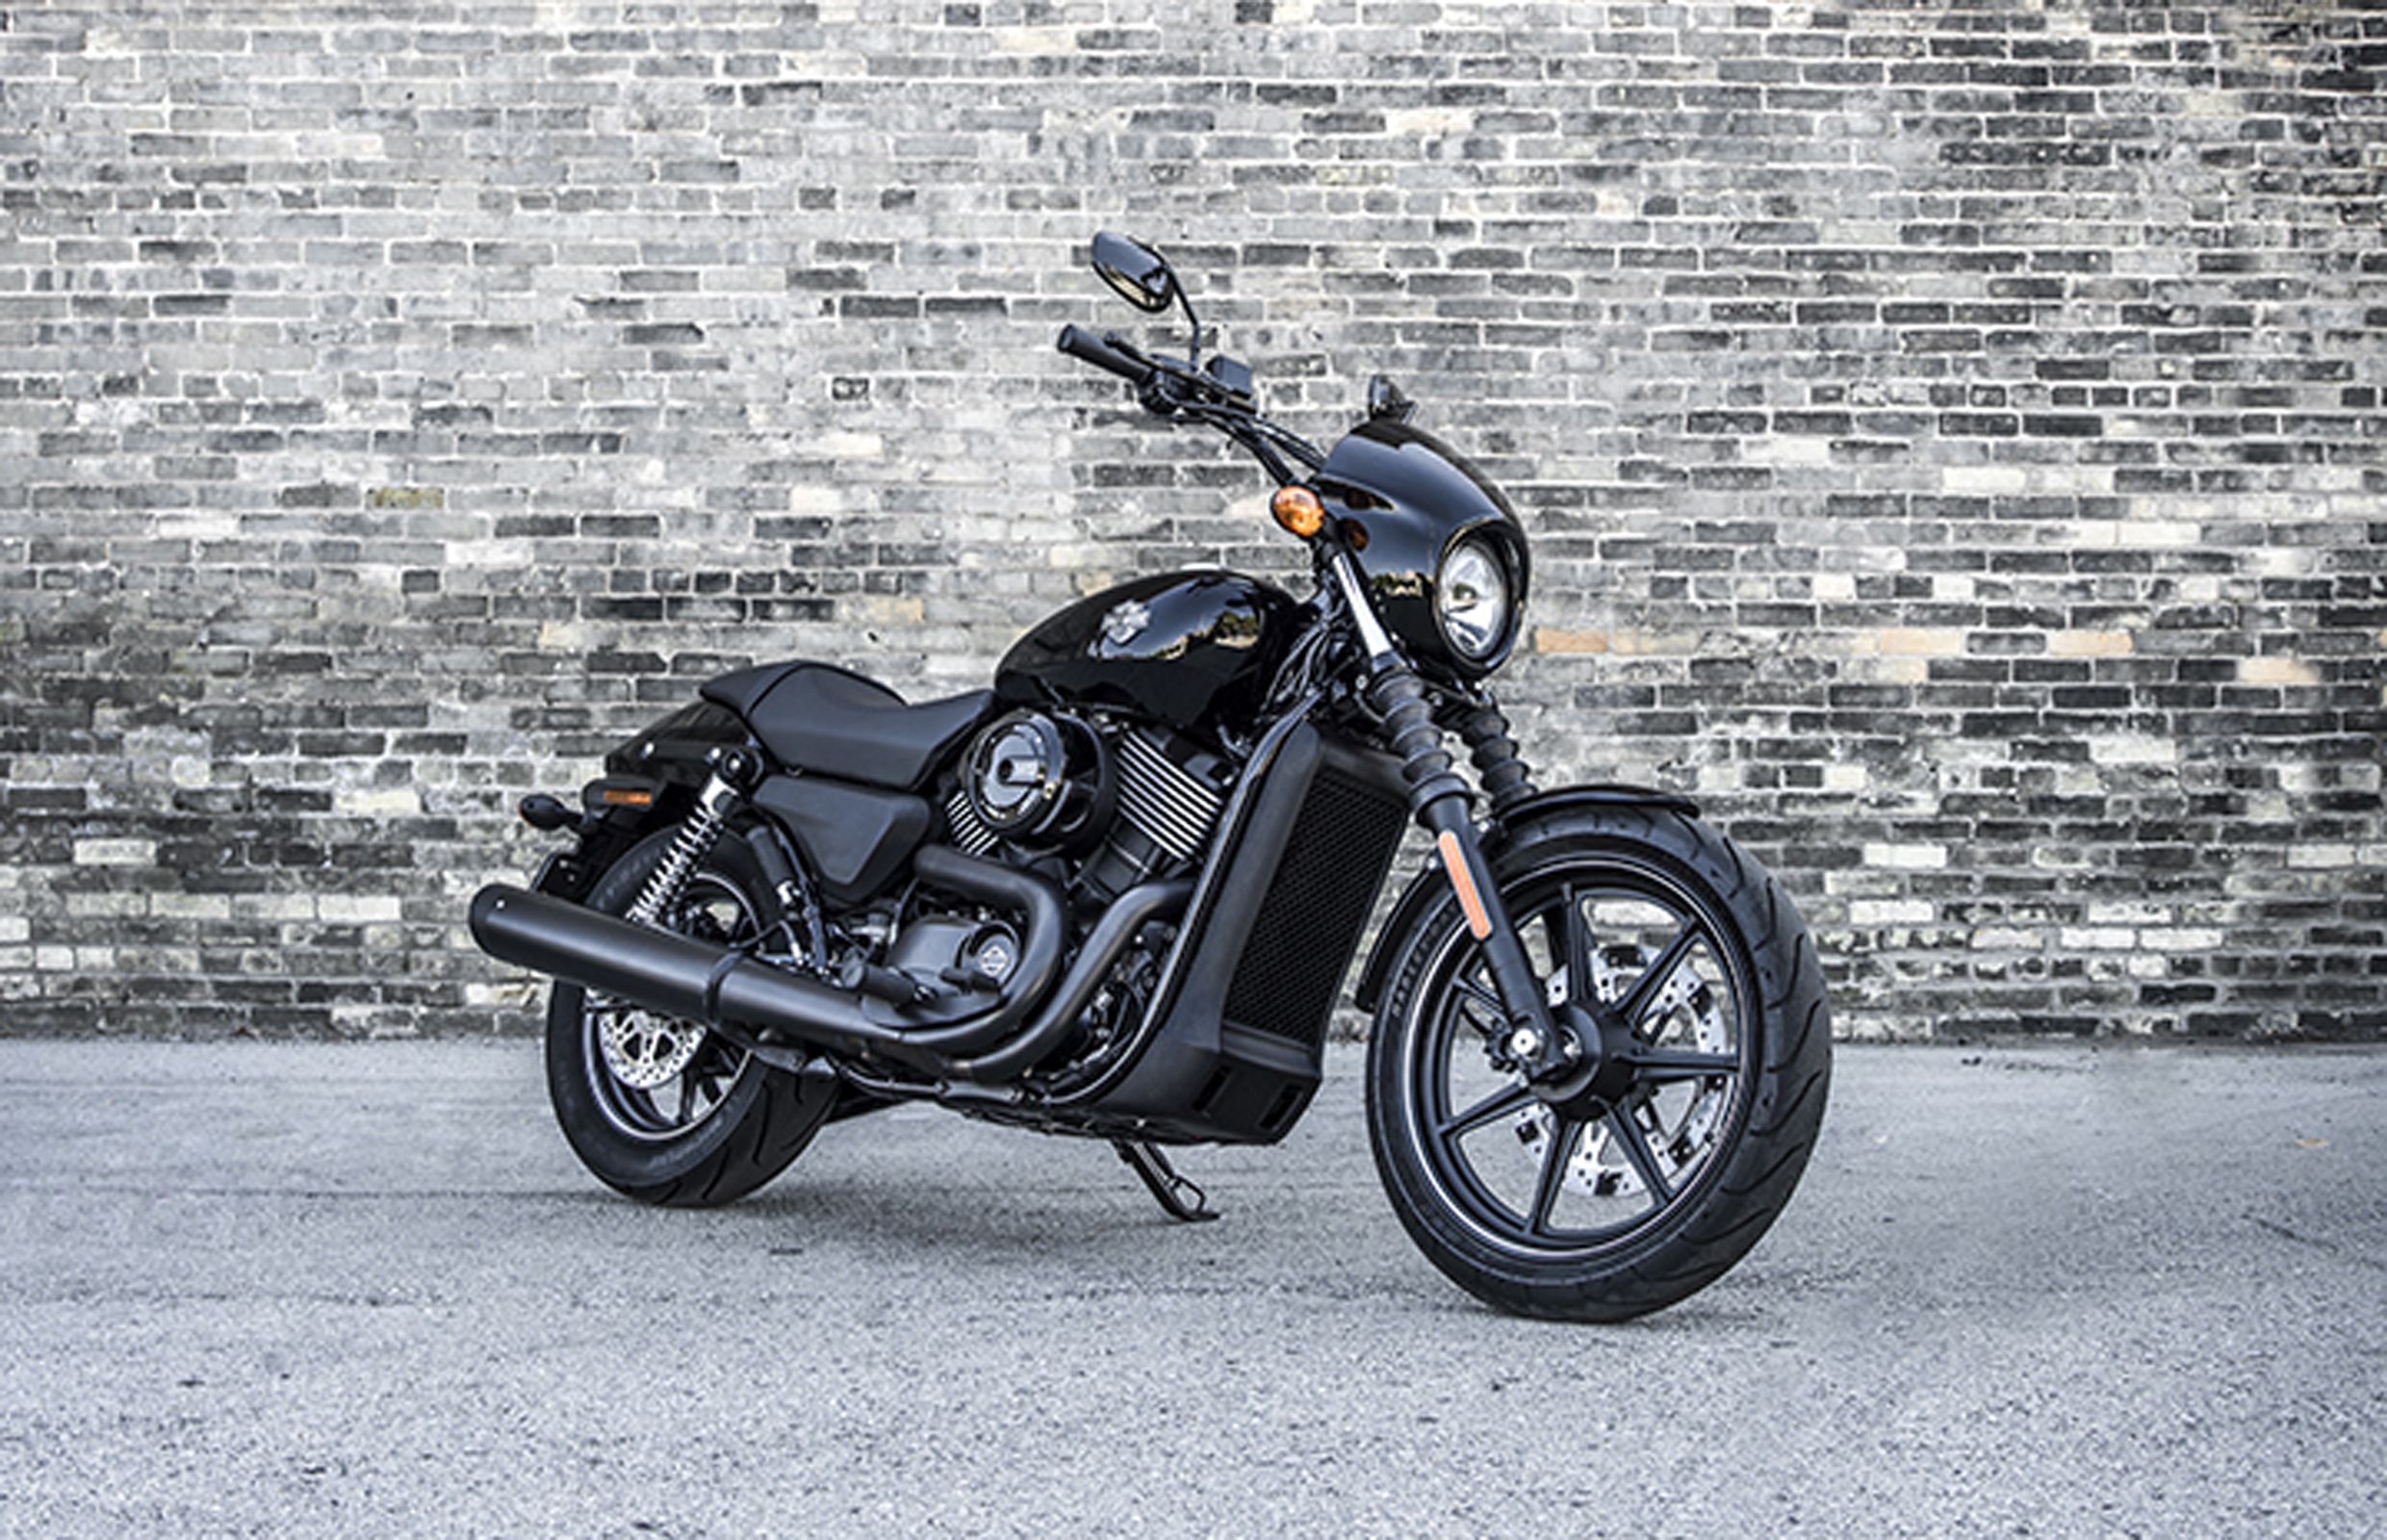 Harley-Davidson rolls out new lightweight bikes